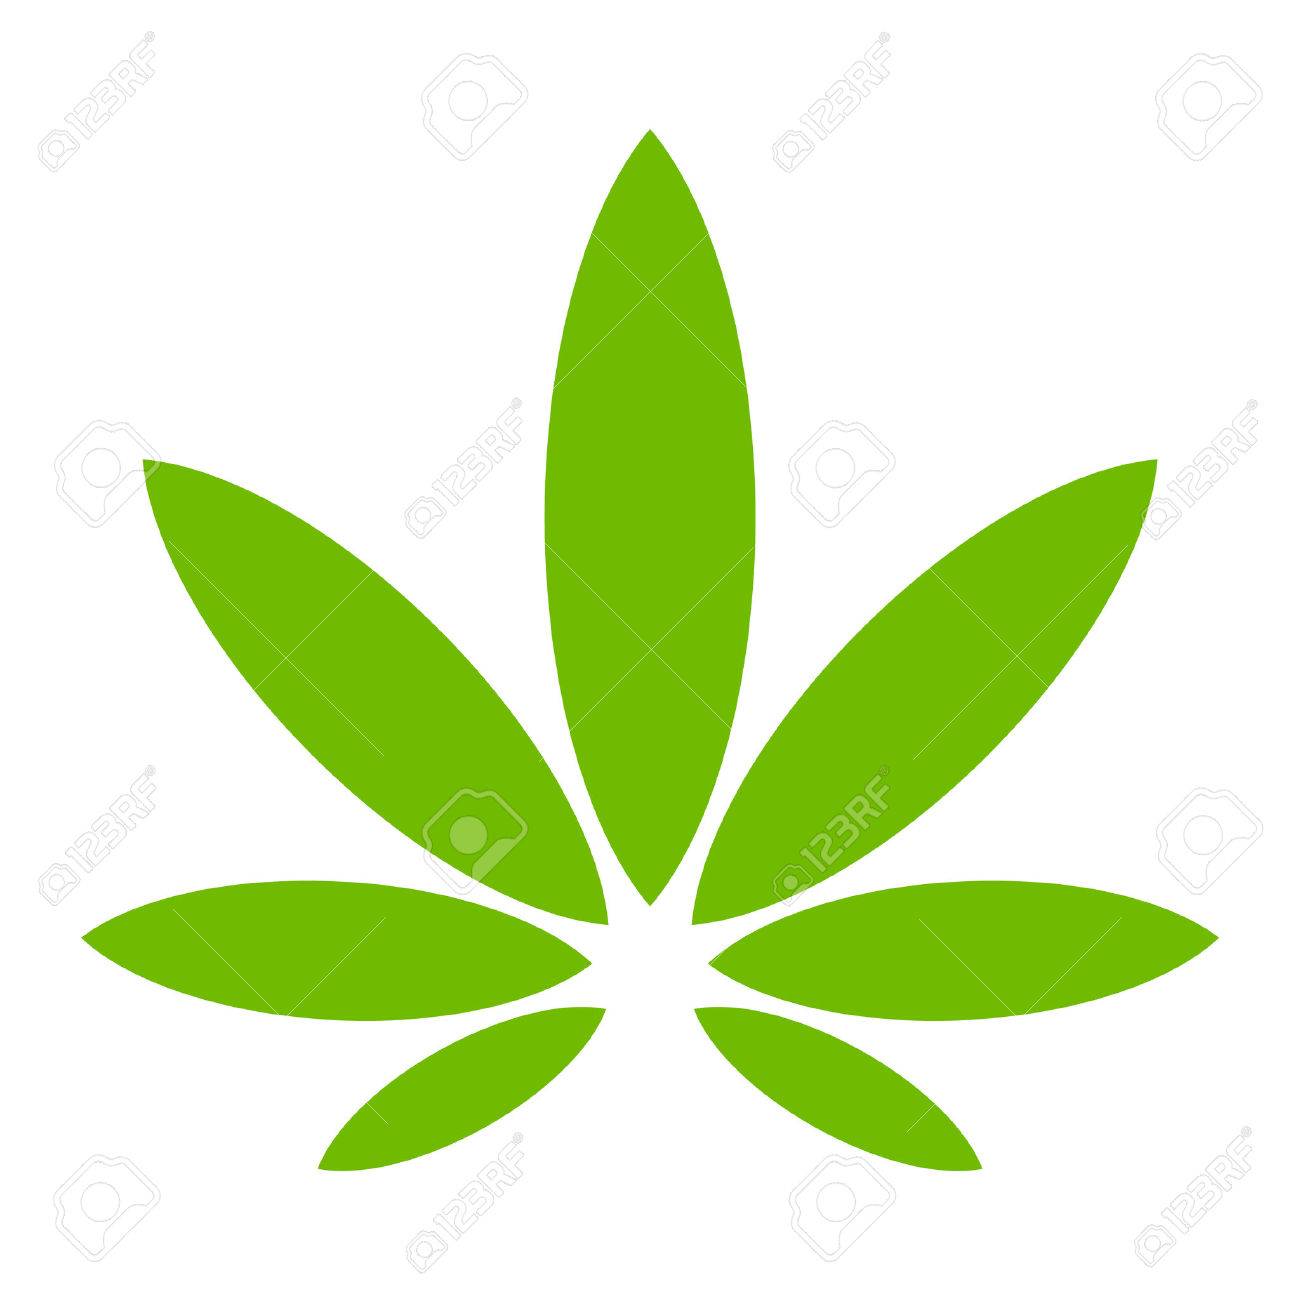 Marijuana Pot Weed Leaf Symbol